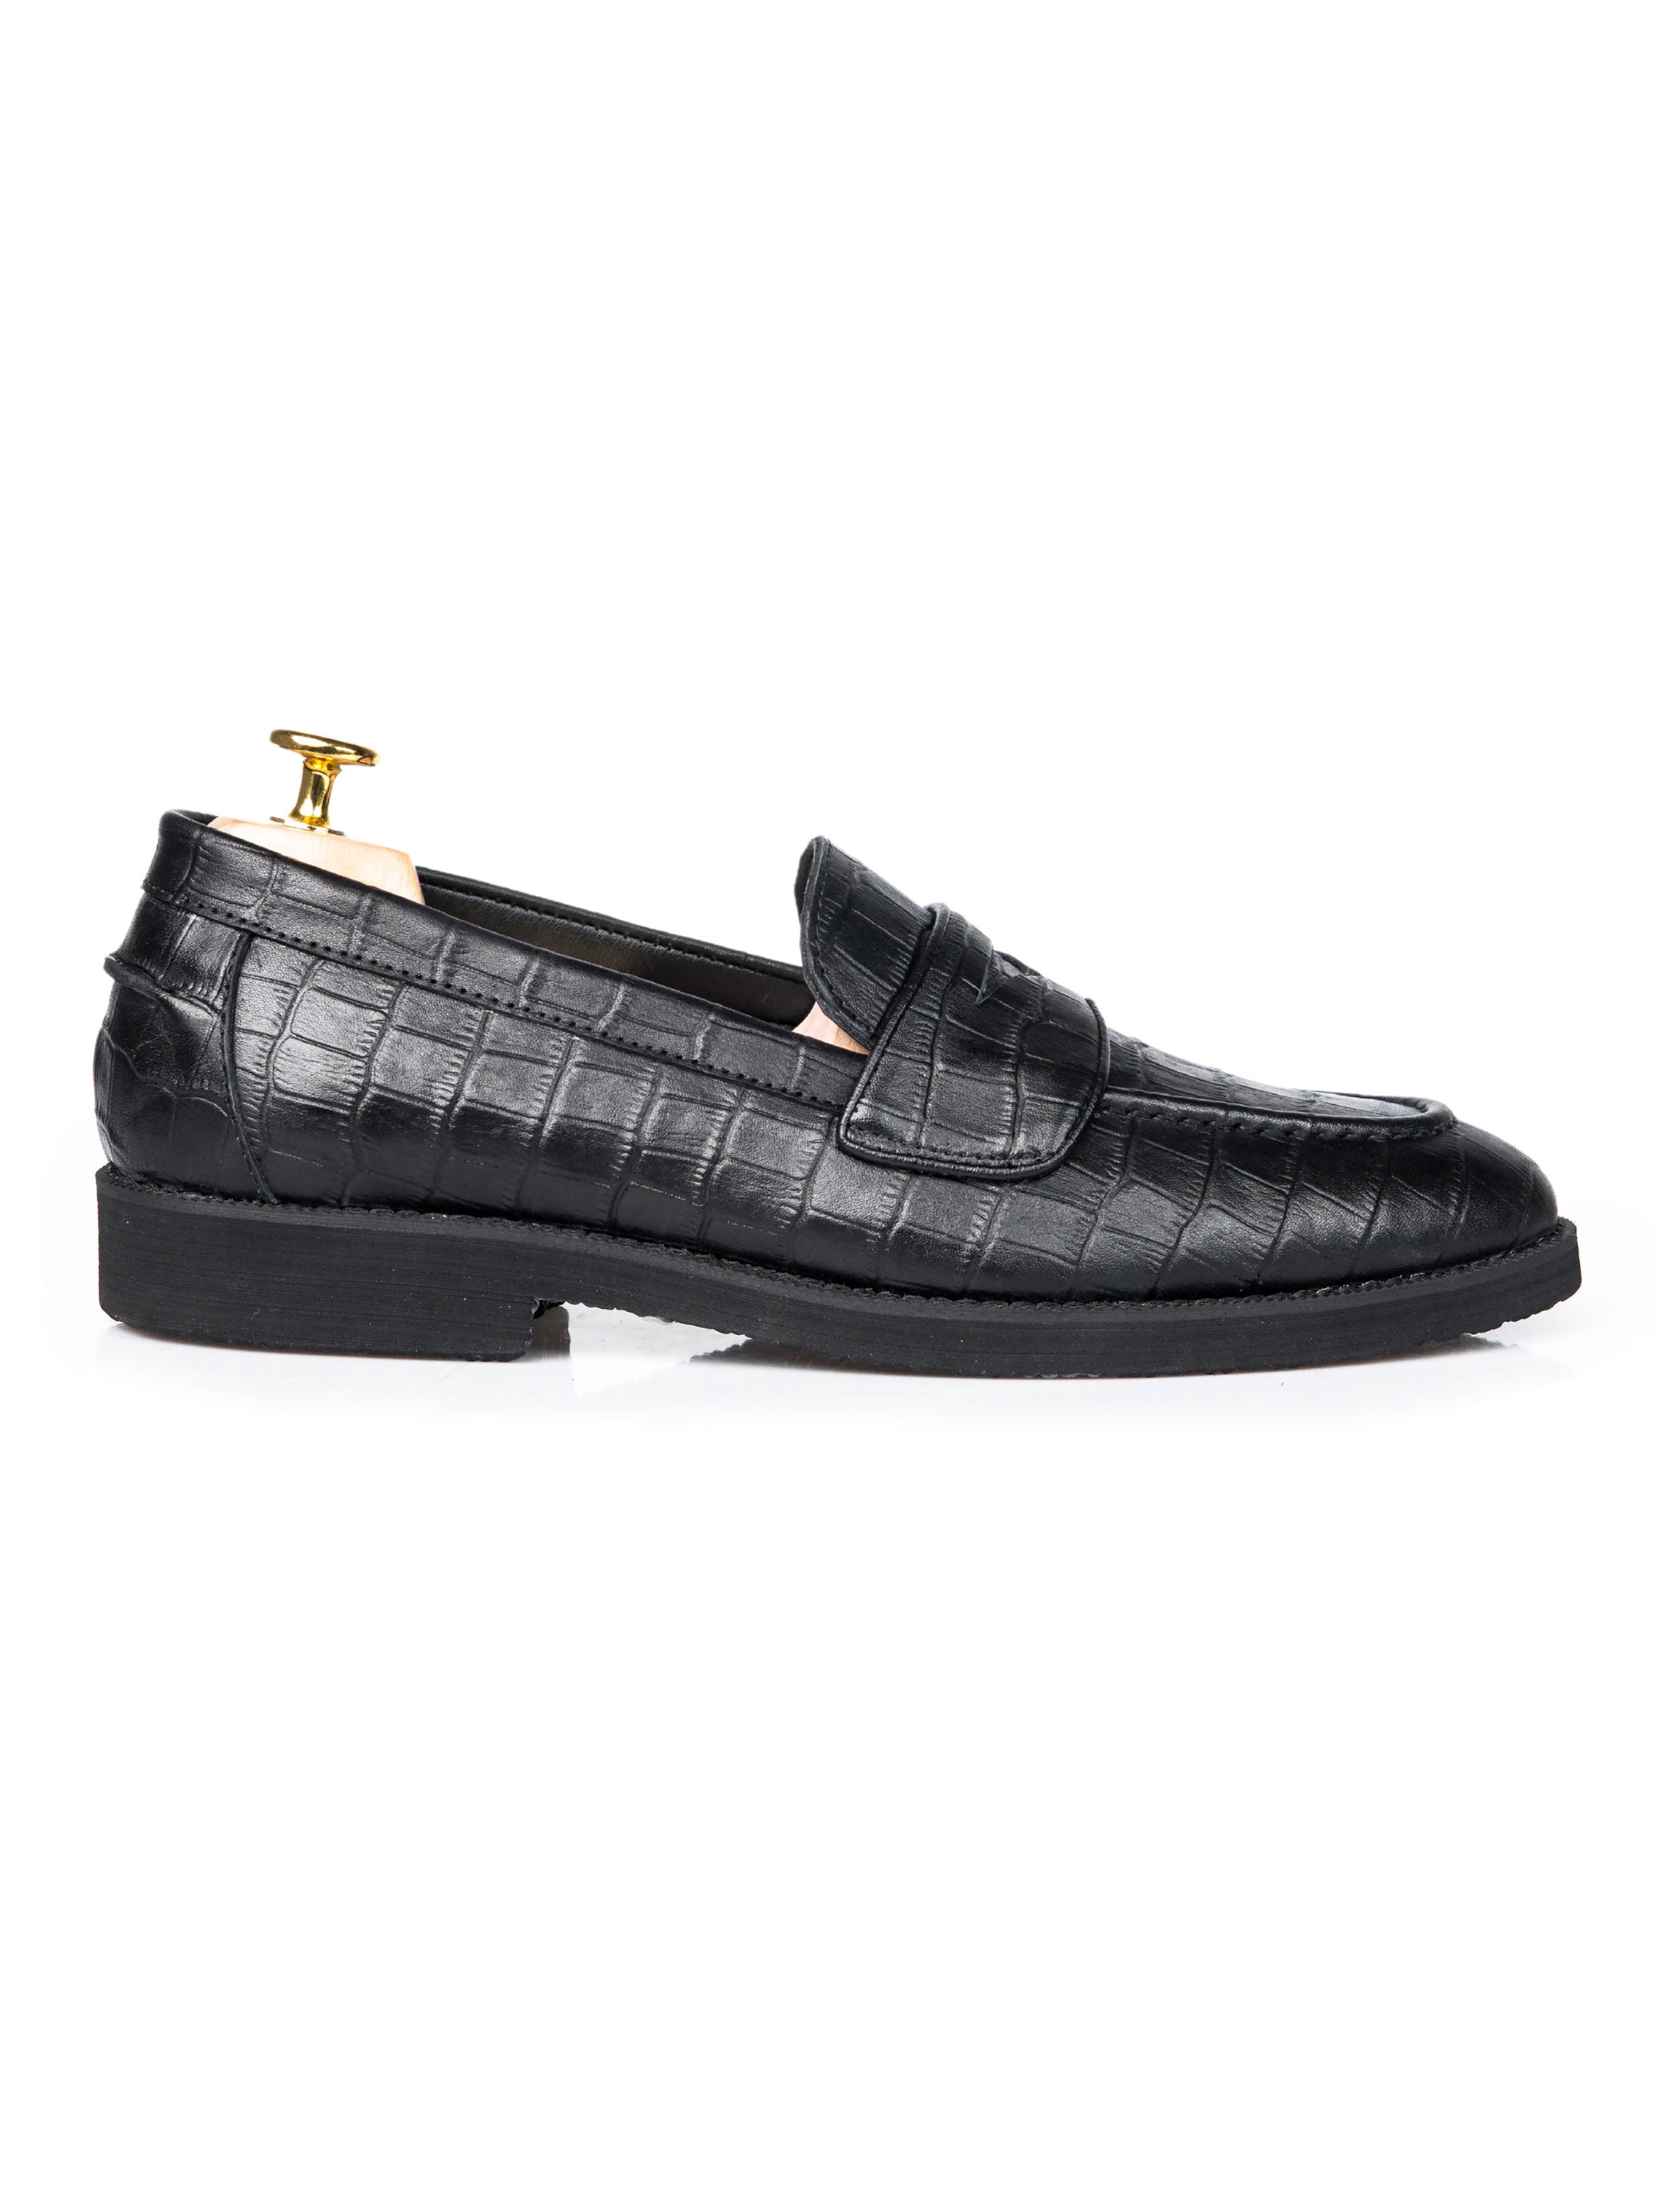 Wayne Penny Loafer - Black Croco Leather (Crepe Sole) - Zeve Shoes